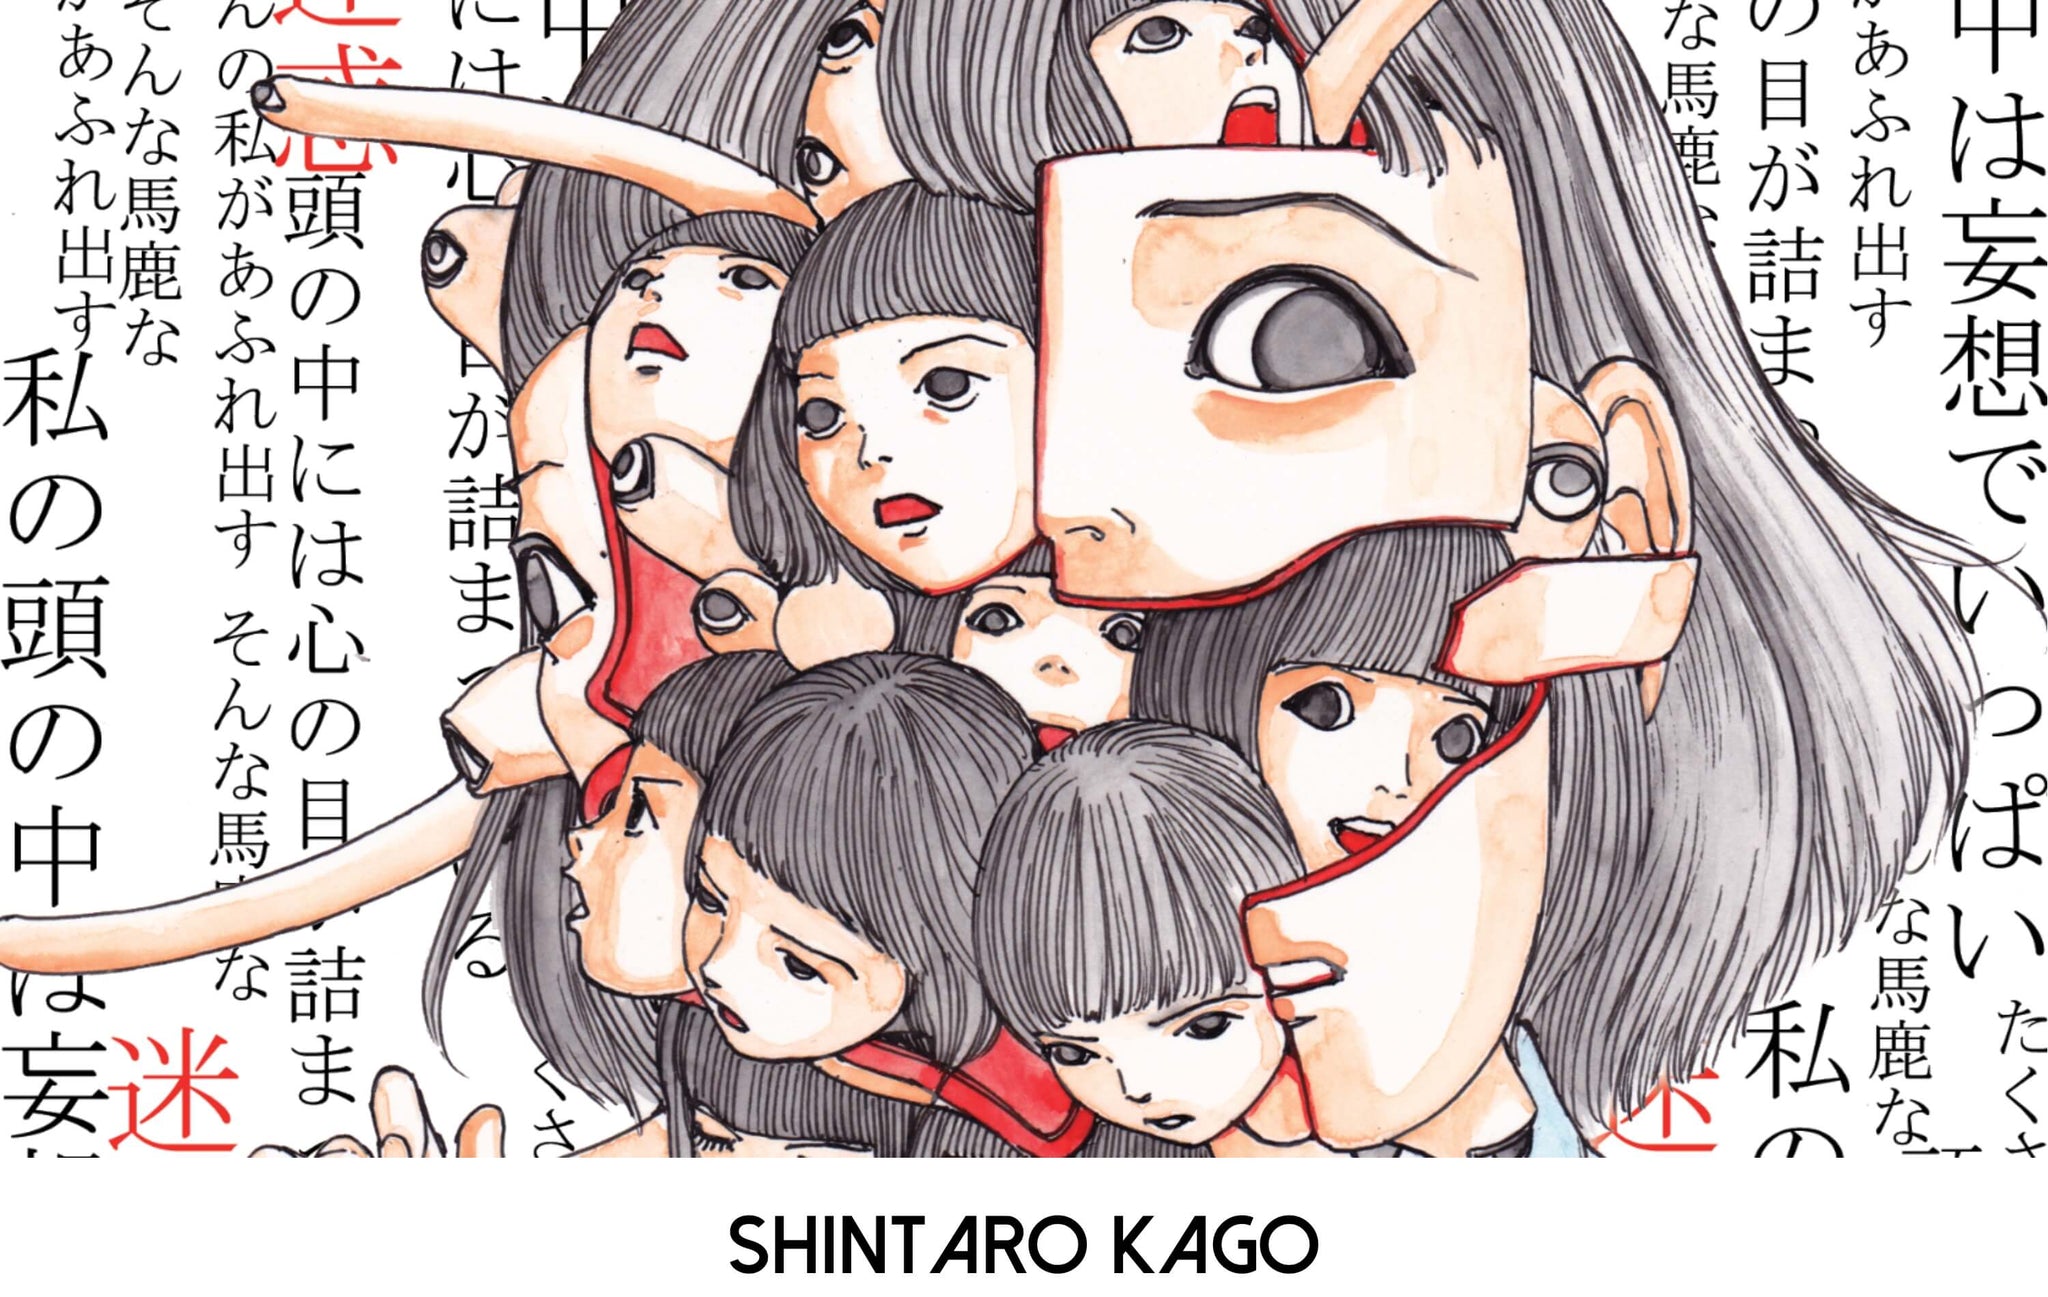 Learn more about Japanese artist Shintaro Kago.